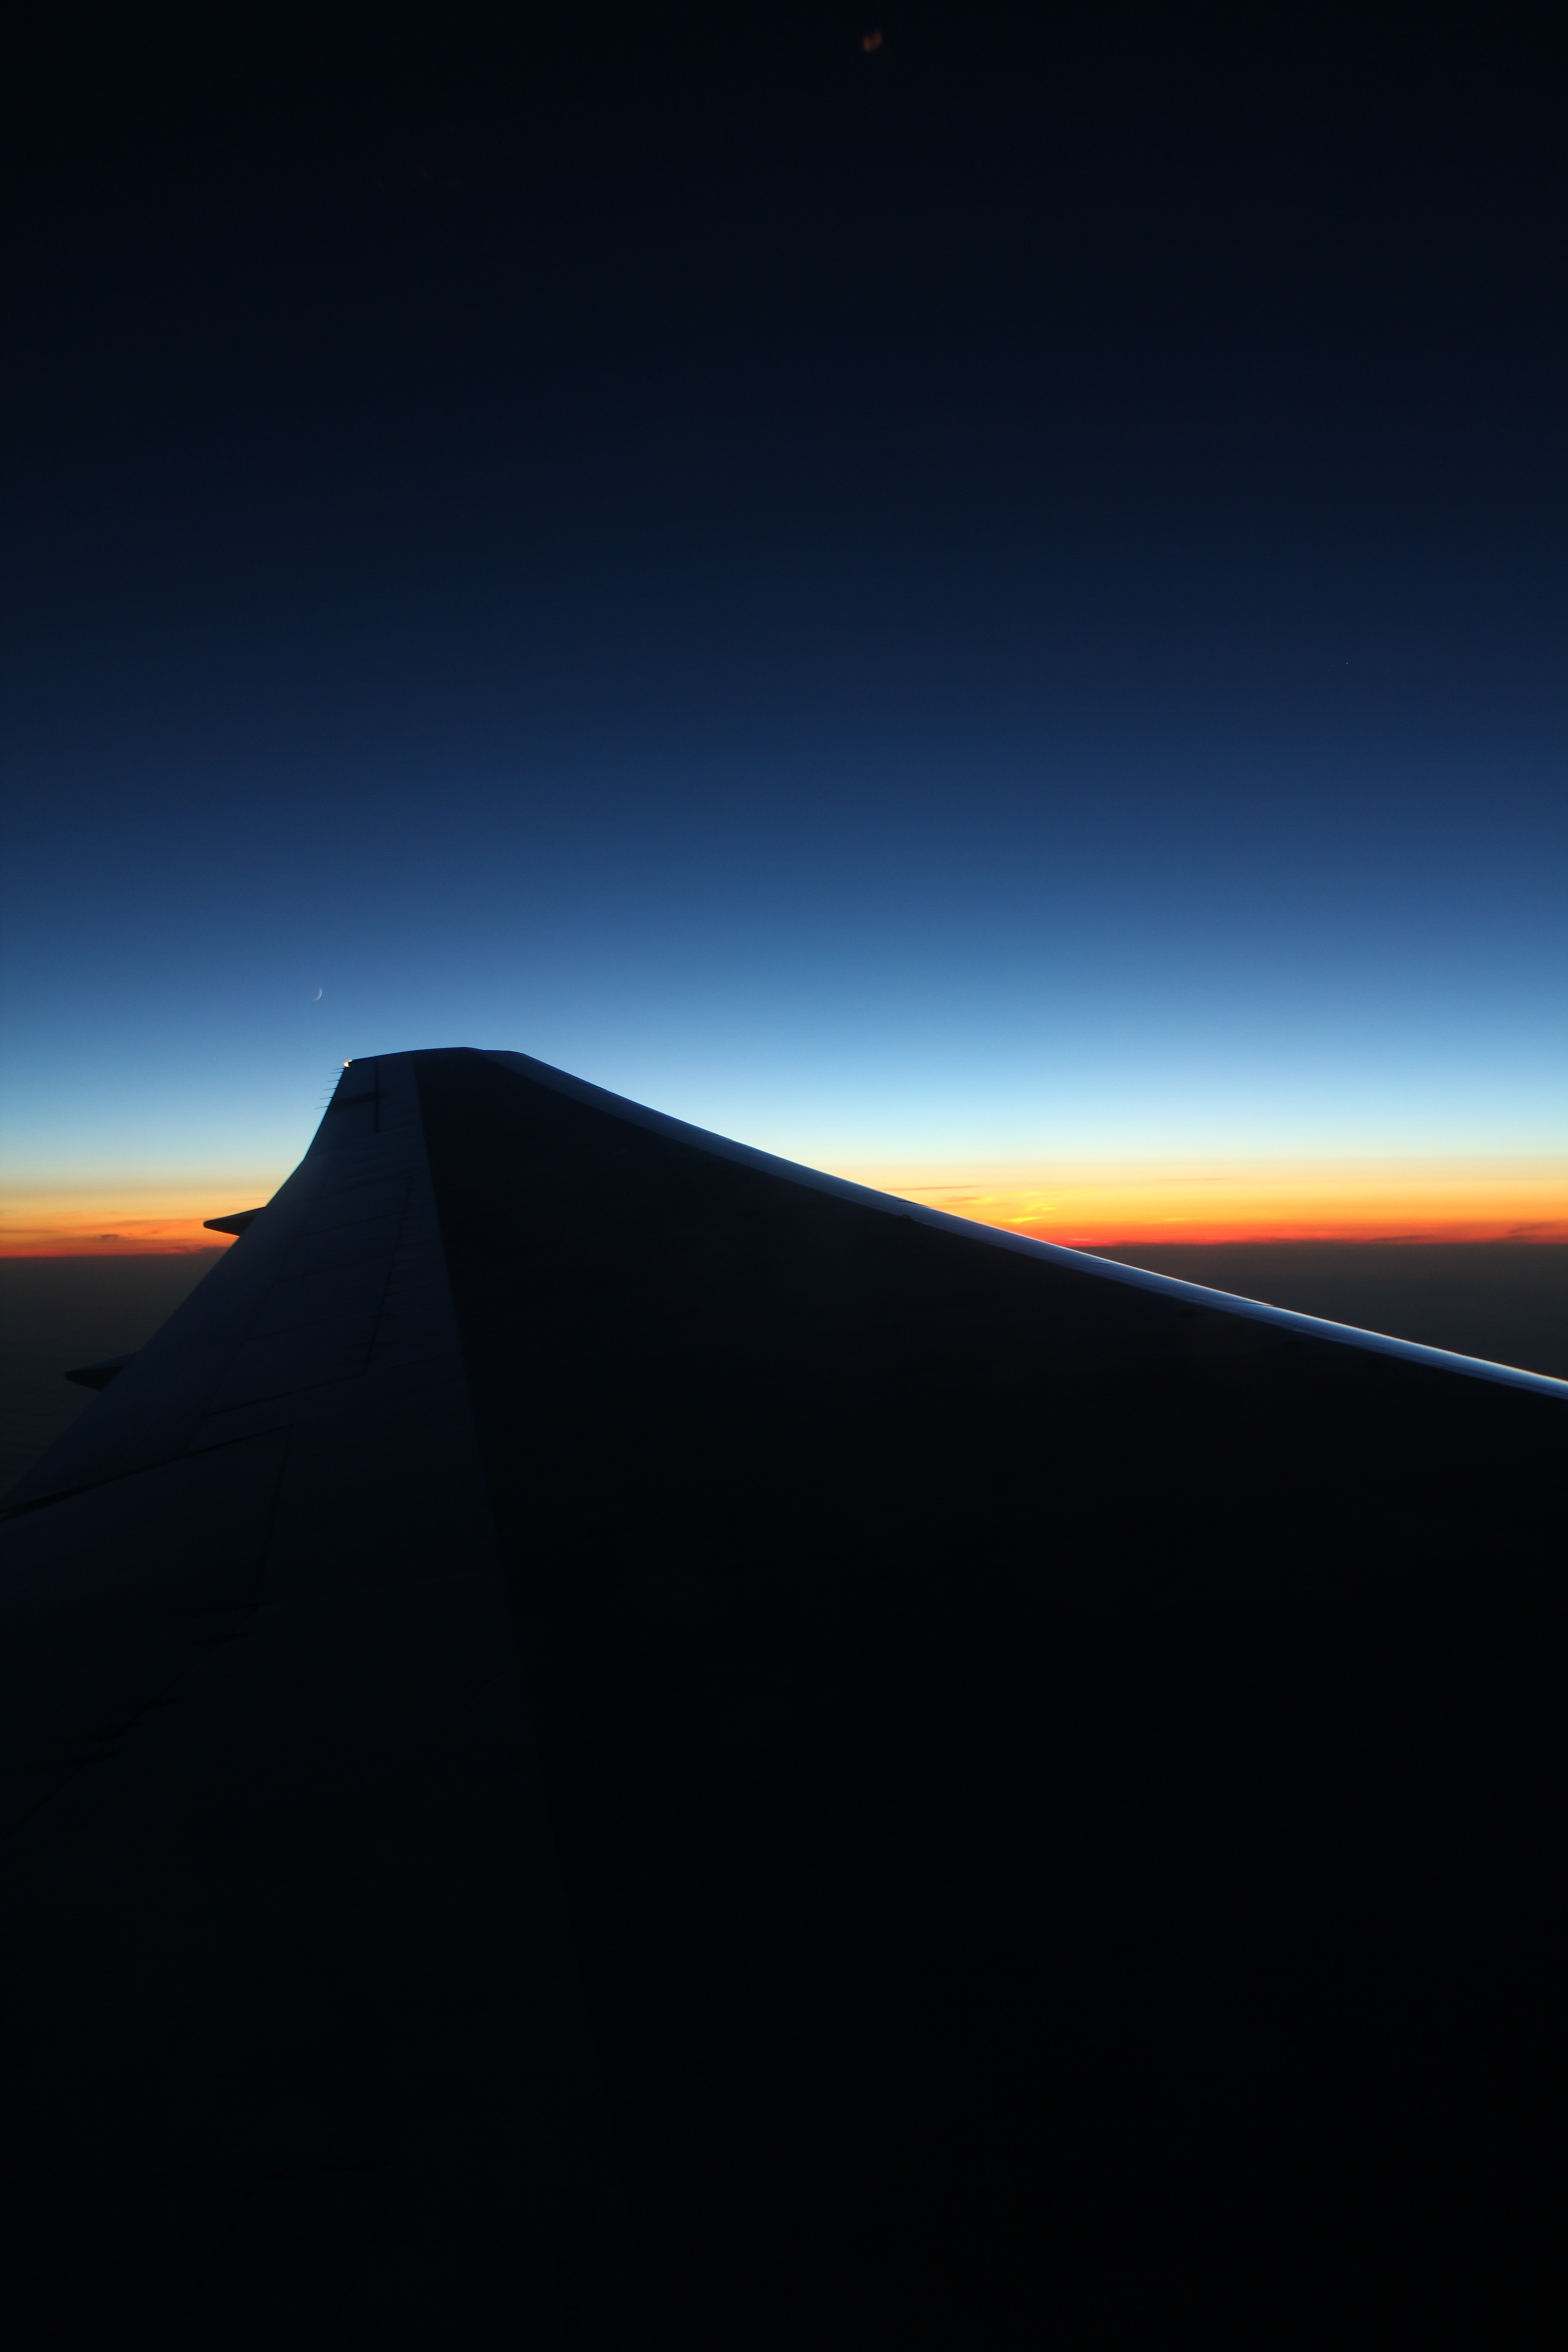 sky, twilight, horizon, dark, dusk, wing, plane, airplane